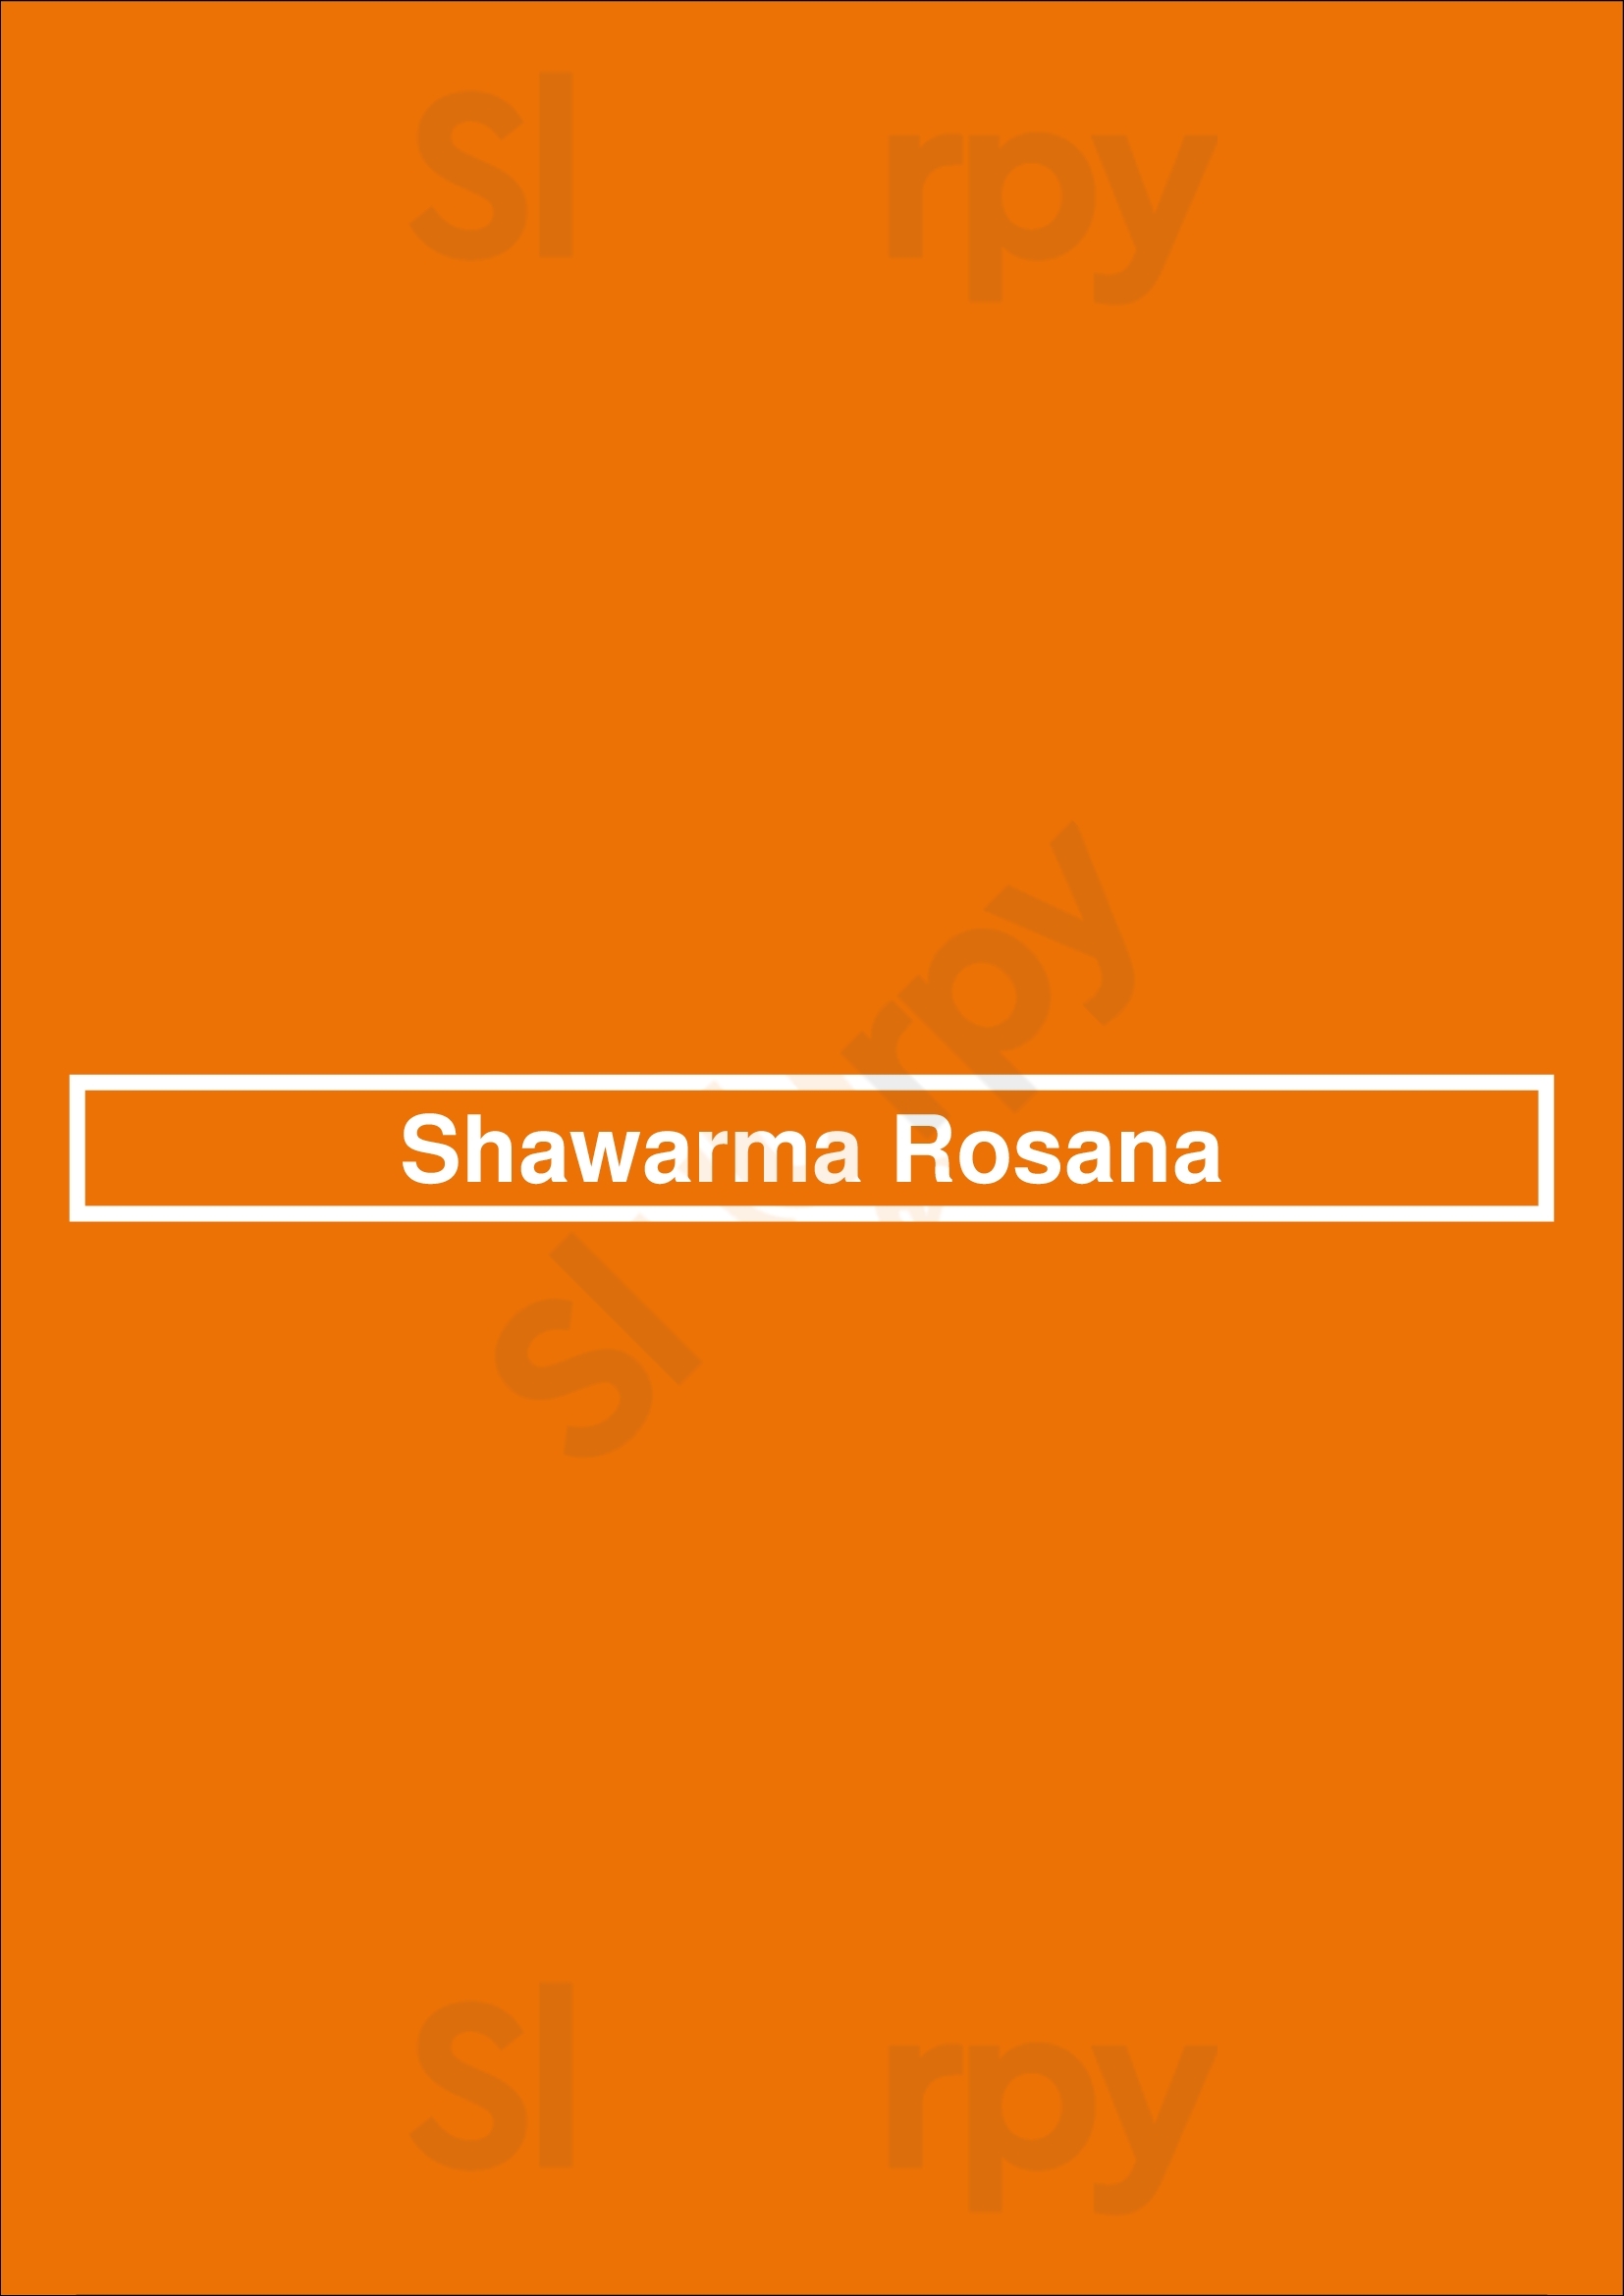 Shawarma Rosana Ottawa Menu - 1